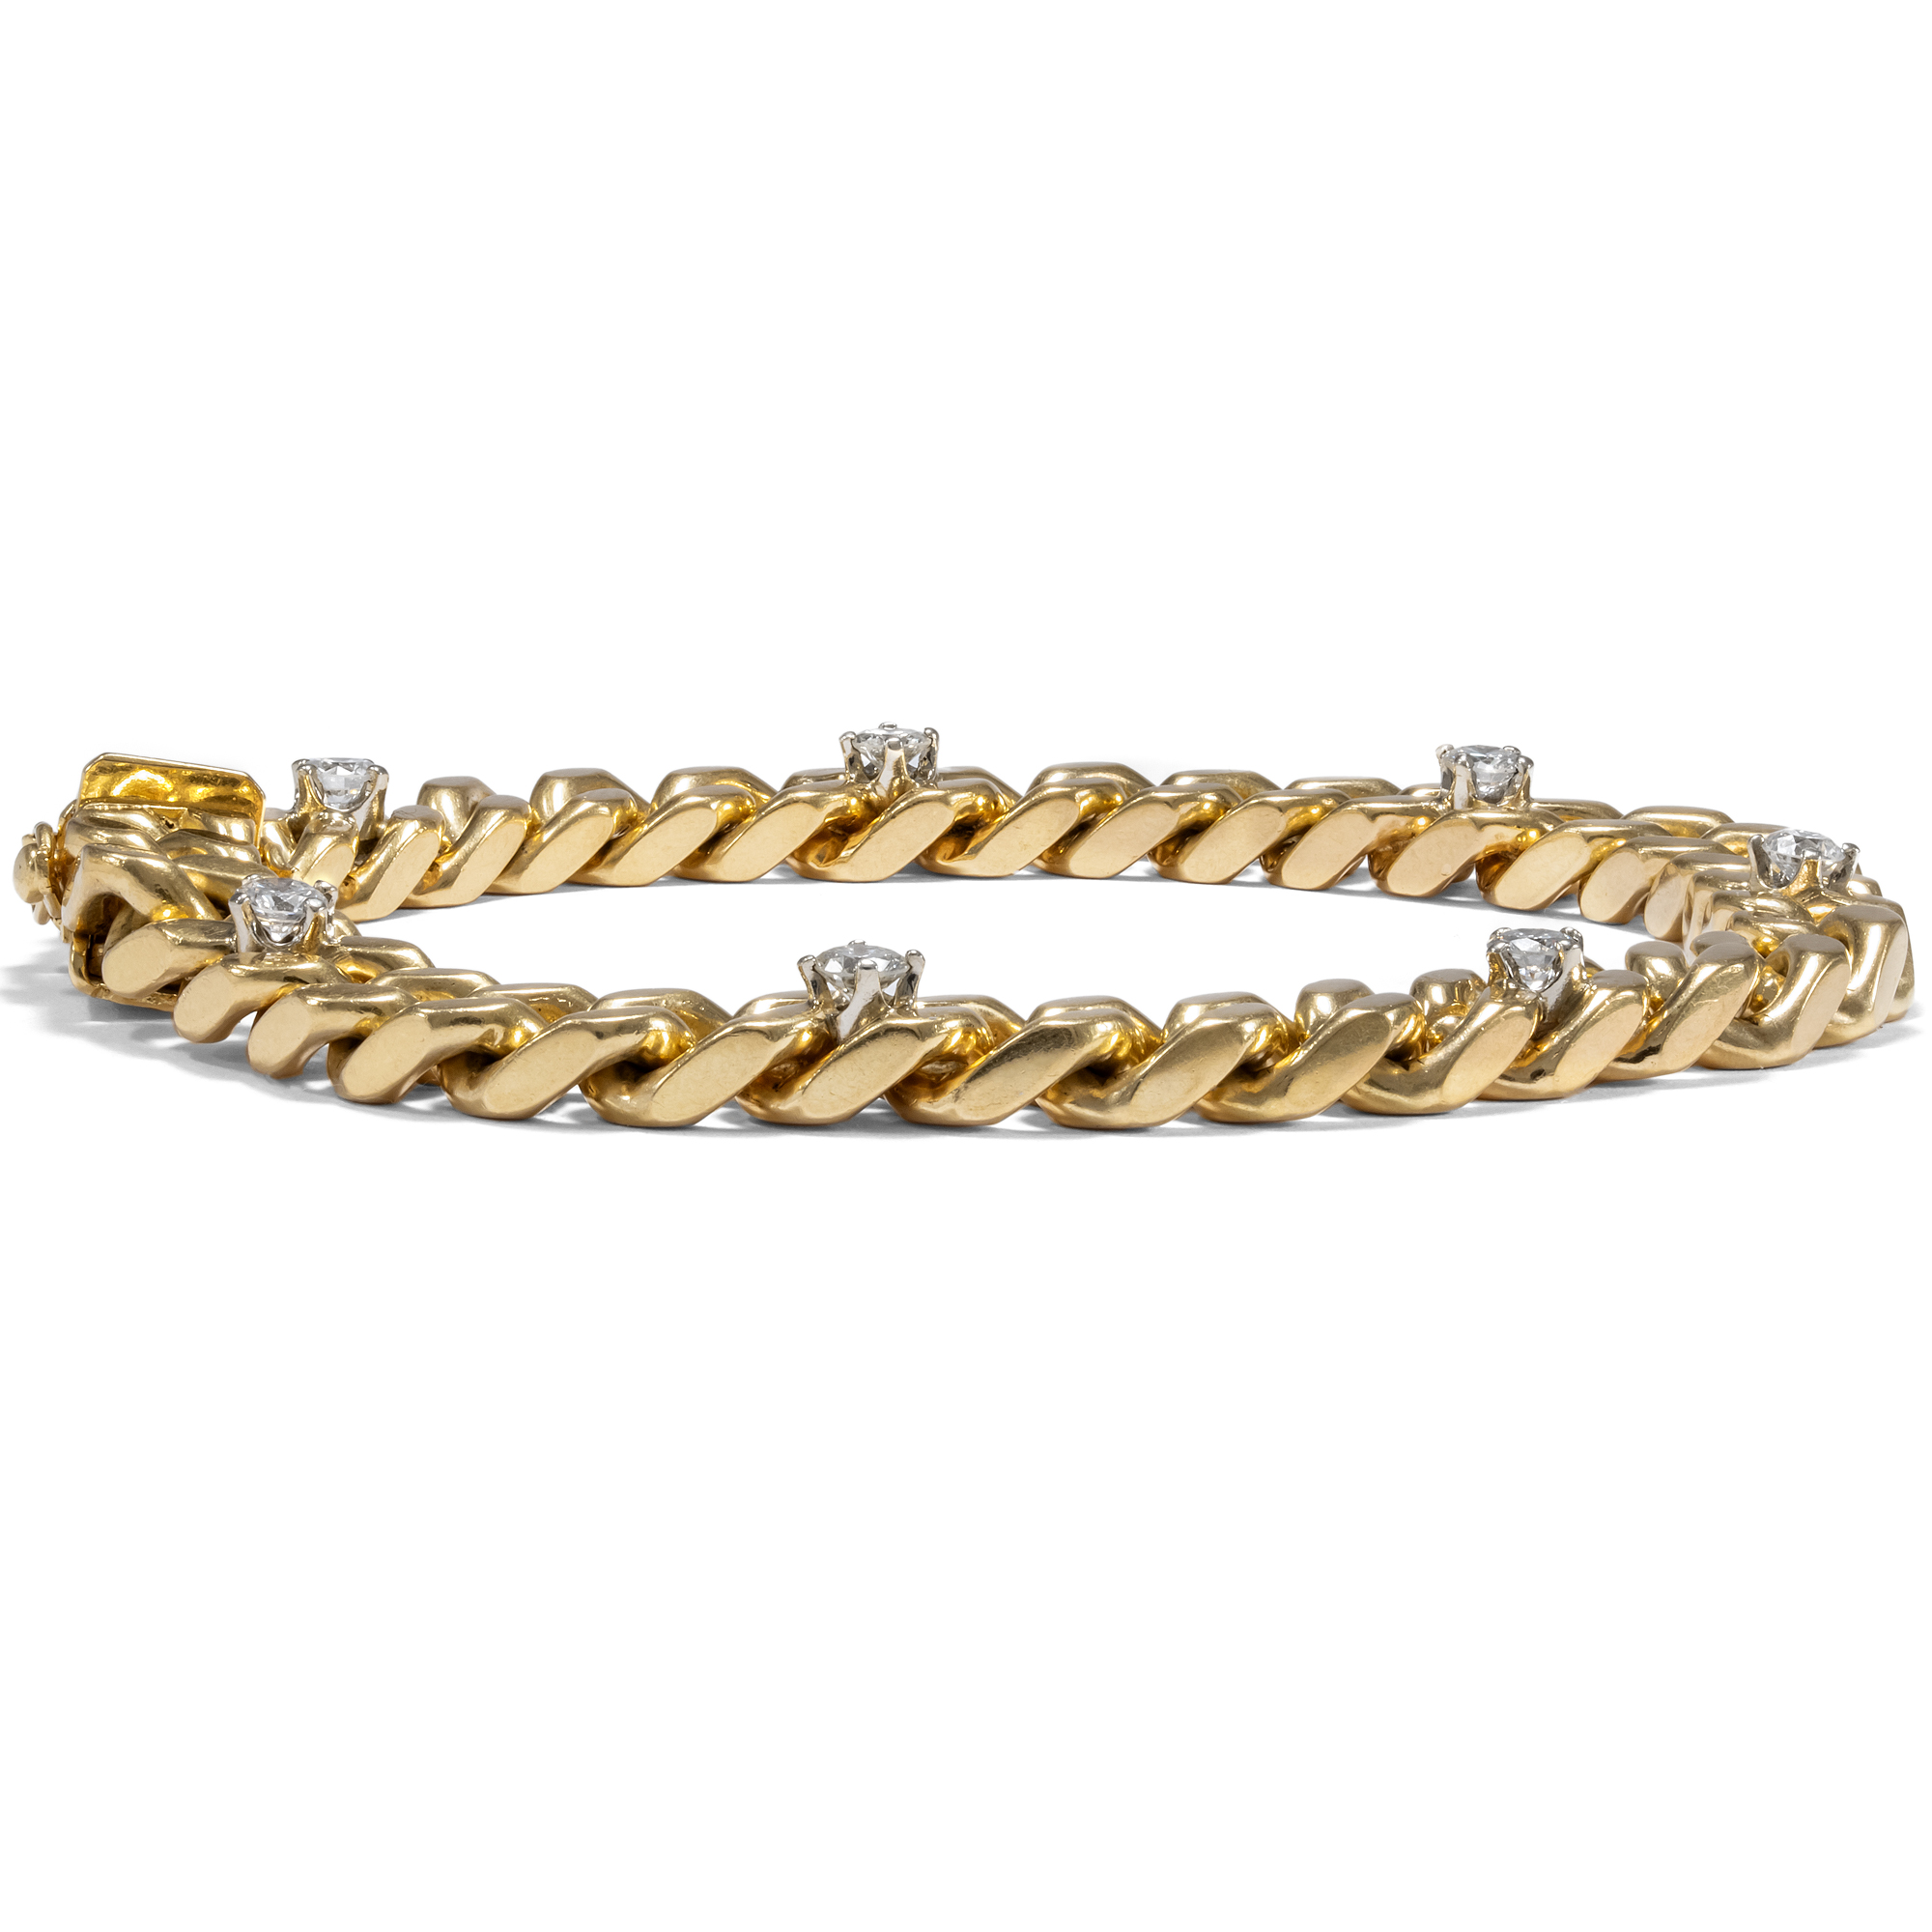 Luxury Bracelet Made Of High Carat Gold & Diamonds, Italy Circa 1960